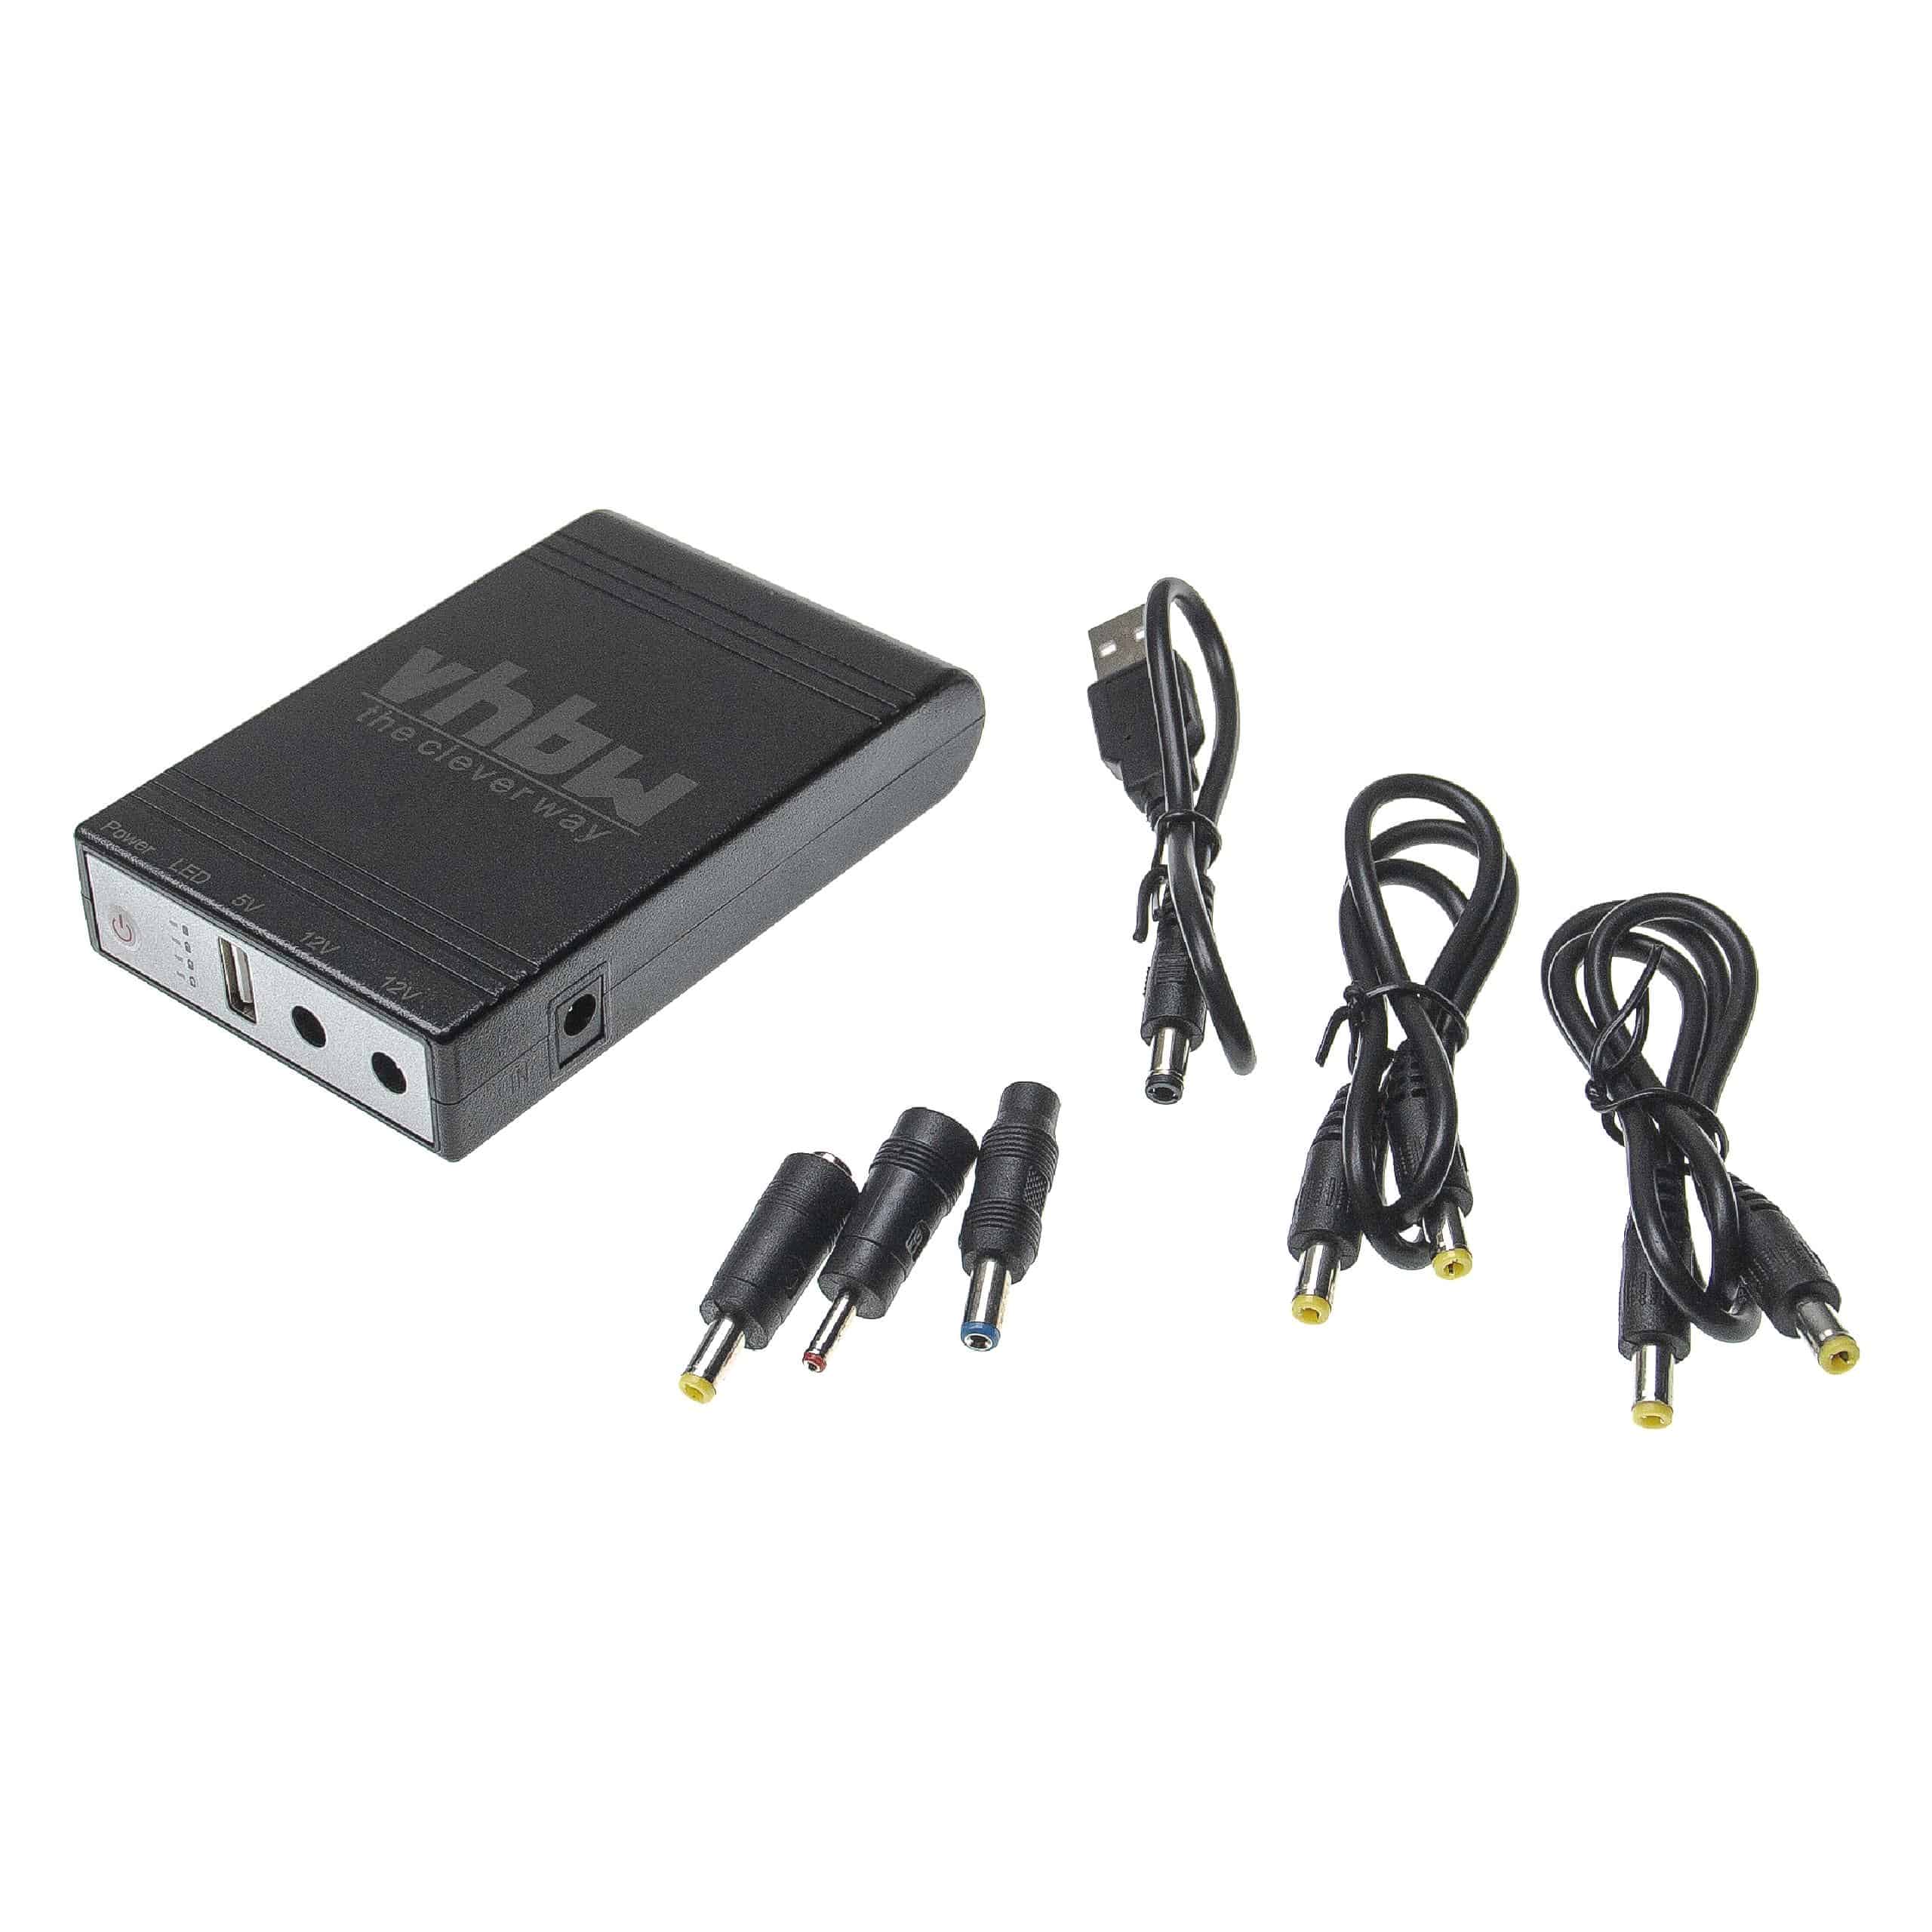 Mini USV für Router, IP-Kameras, Modem, Computer u.a. - USB 5 V / DC 12 V, 1,0 A